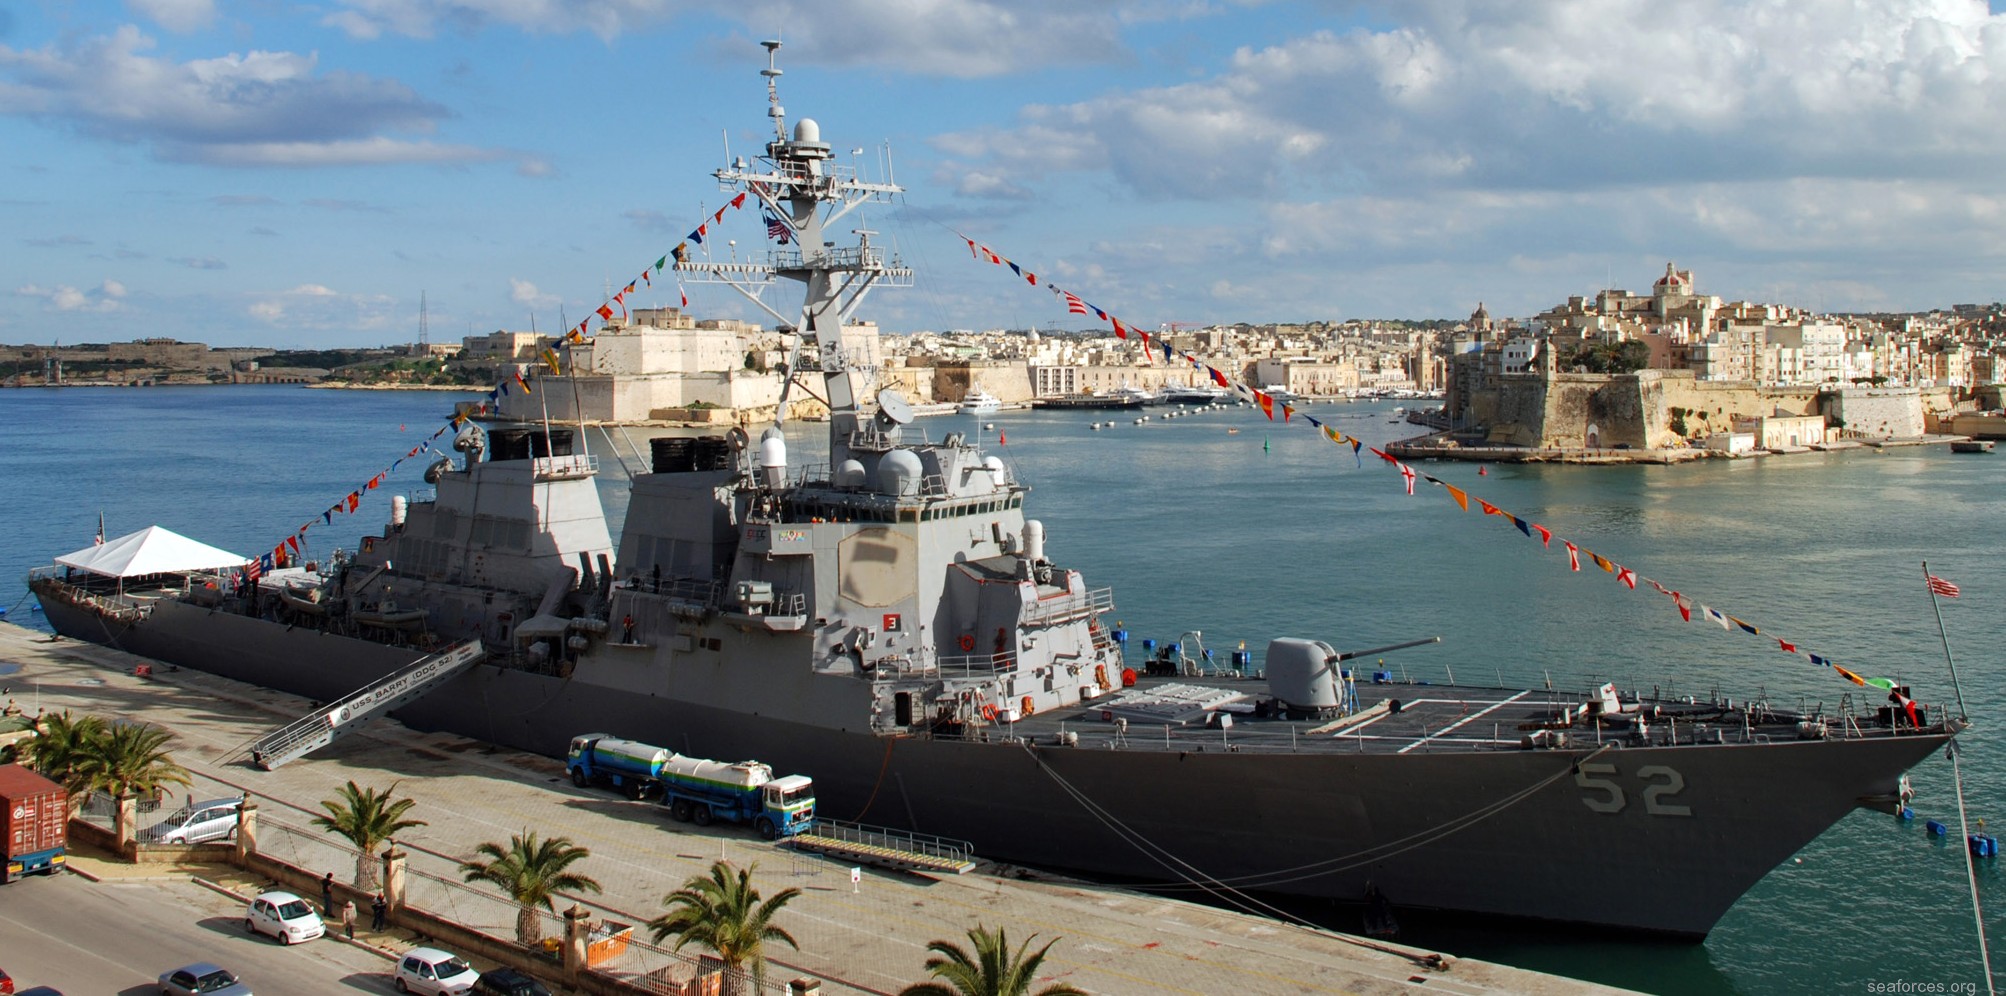 ddg-52 uss barry guided missile destroyer us navy 65 valletta malta